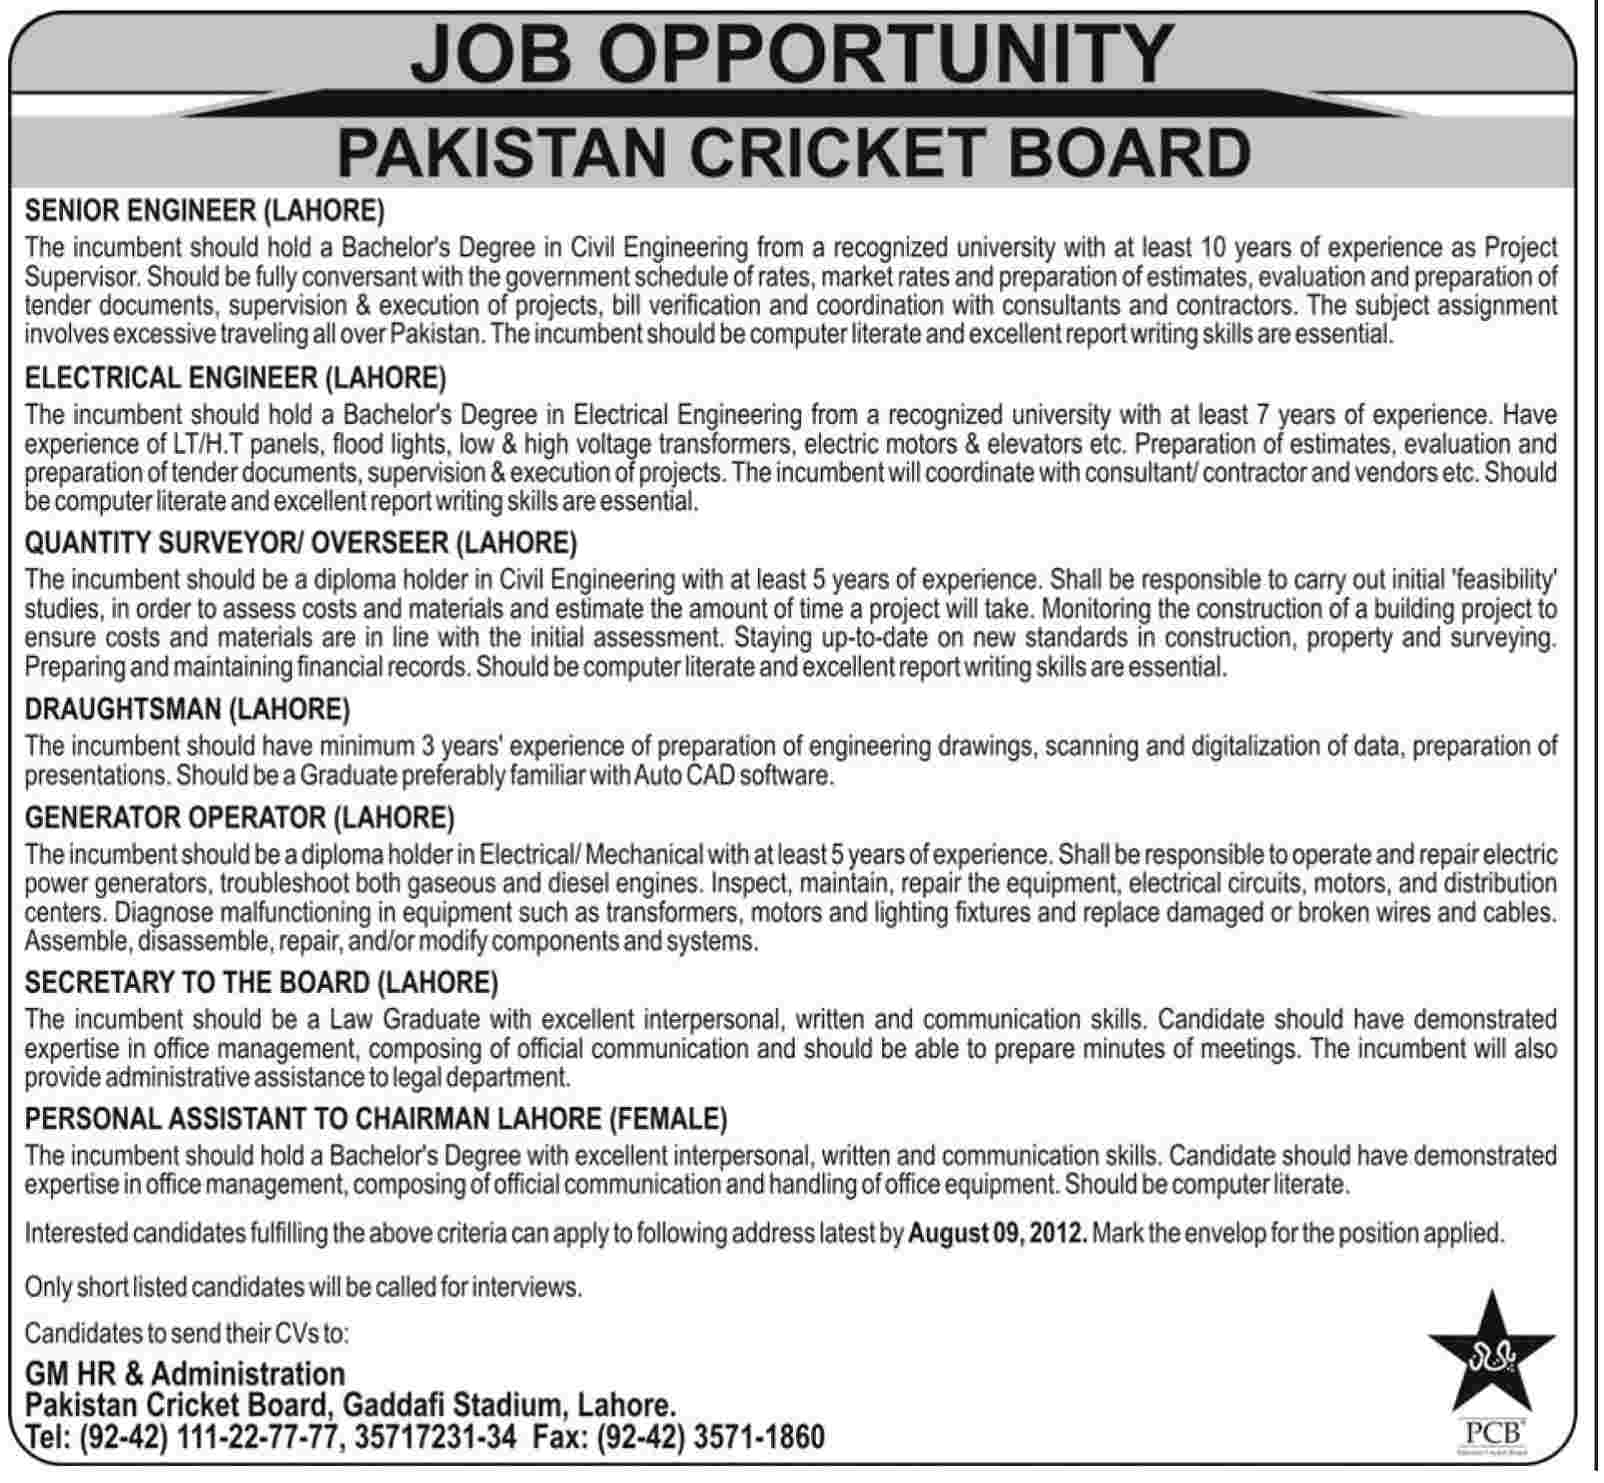 Engineerig and Technical Job at Pakistan Cricket Board (PCB) (Government Job)